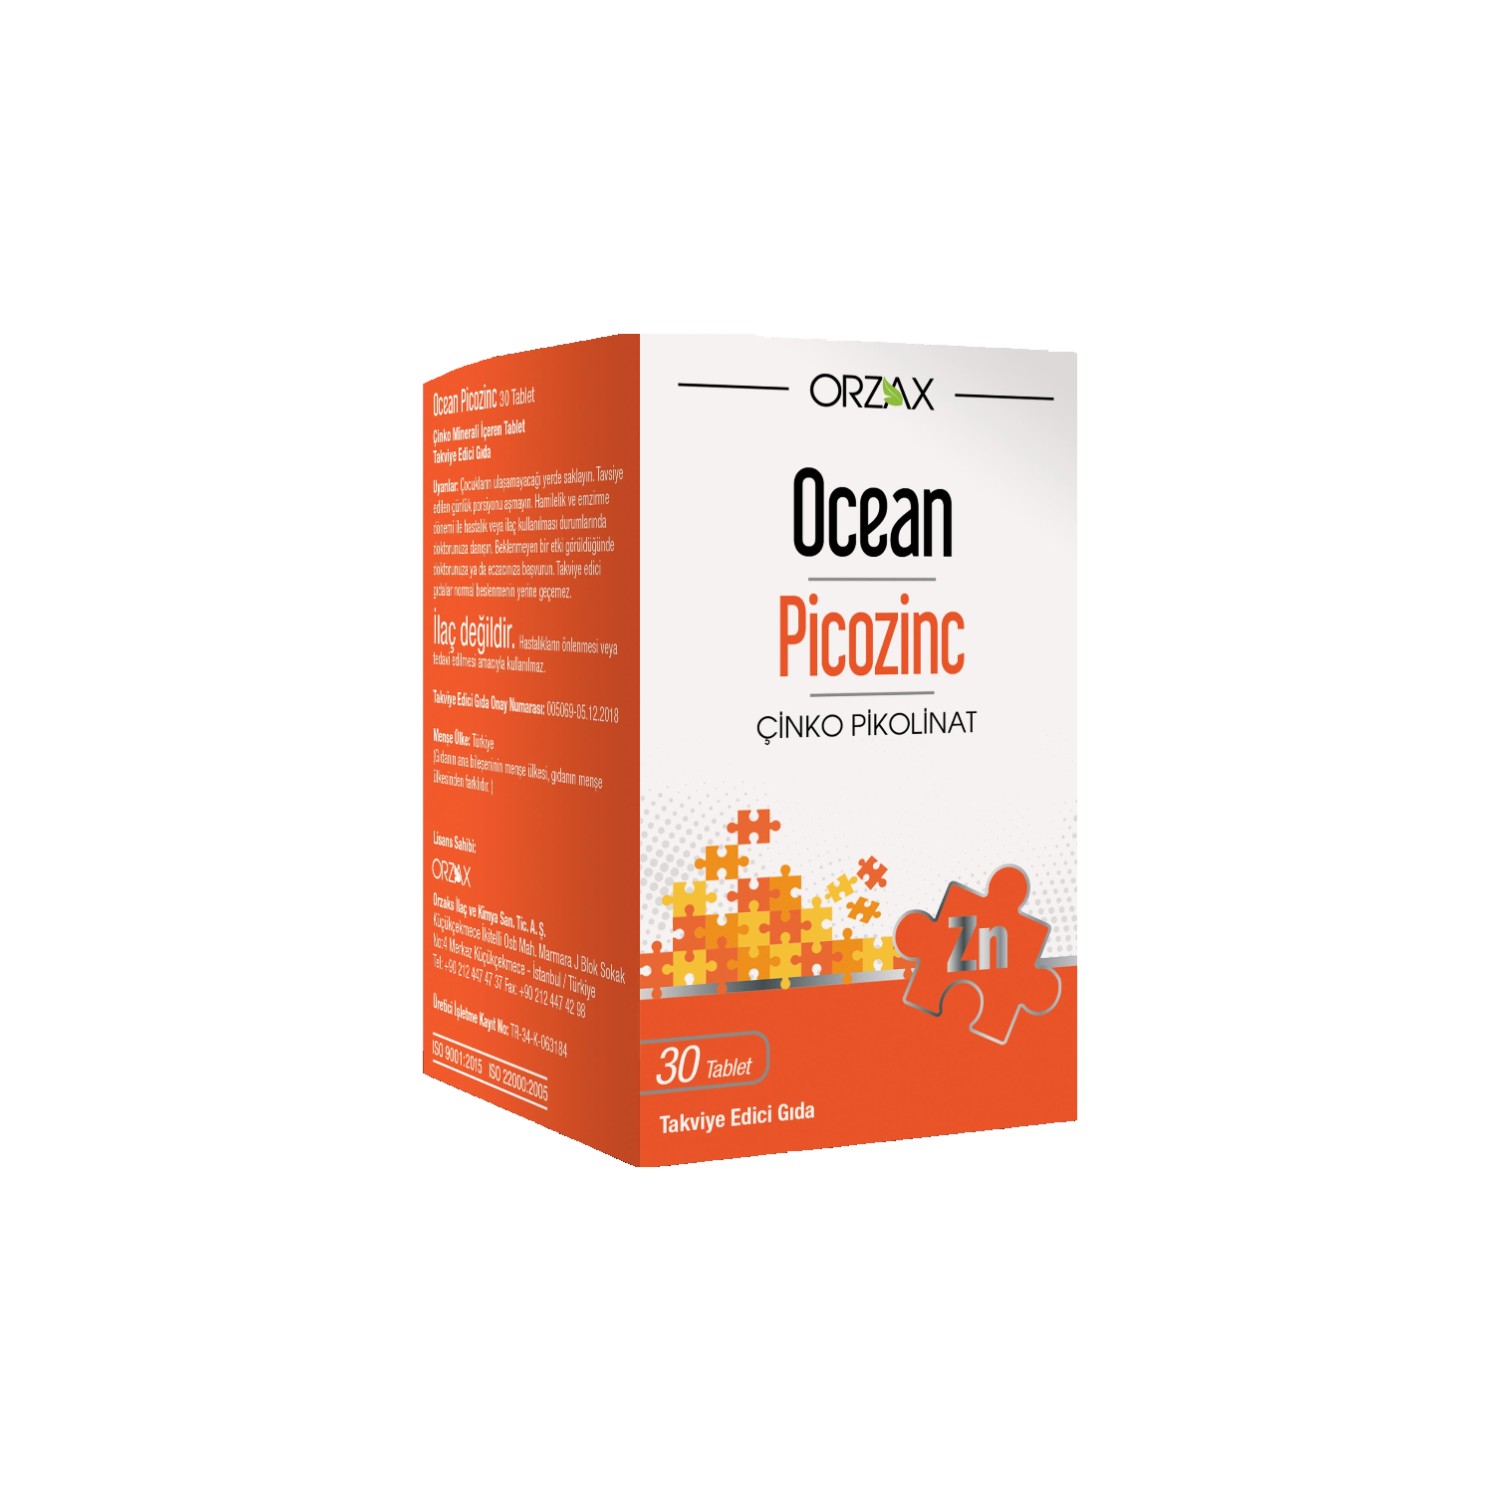 Пищевая добавка Orzax Ocean Picozinc Supplementary Food, 4 упаковки по 30 капсул пищевая добавка ocean picozinc cinko picolinate 30 таблеток